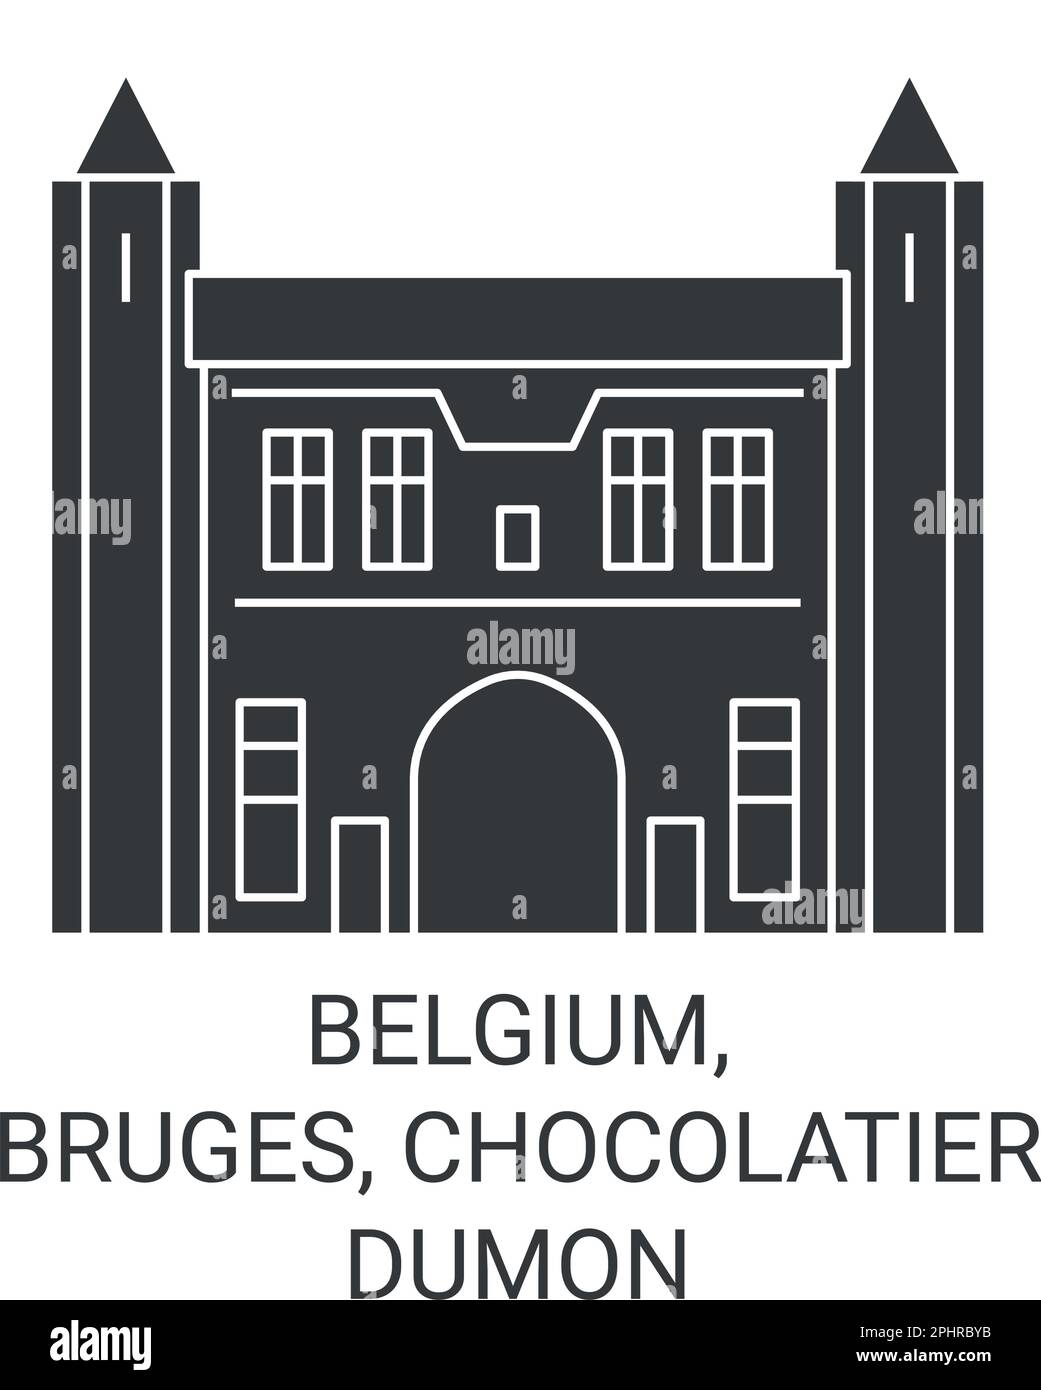 Belgium, Bruges, Chocolatier Dumon viaggio punto di riferimento vettoriale illustrazione Illustrazione Vettoriale